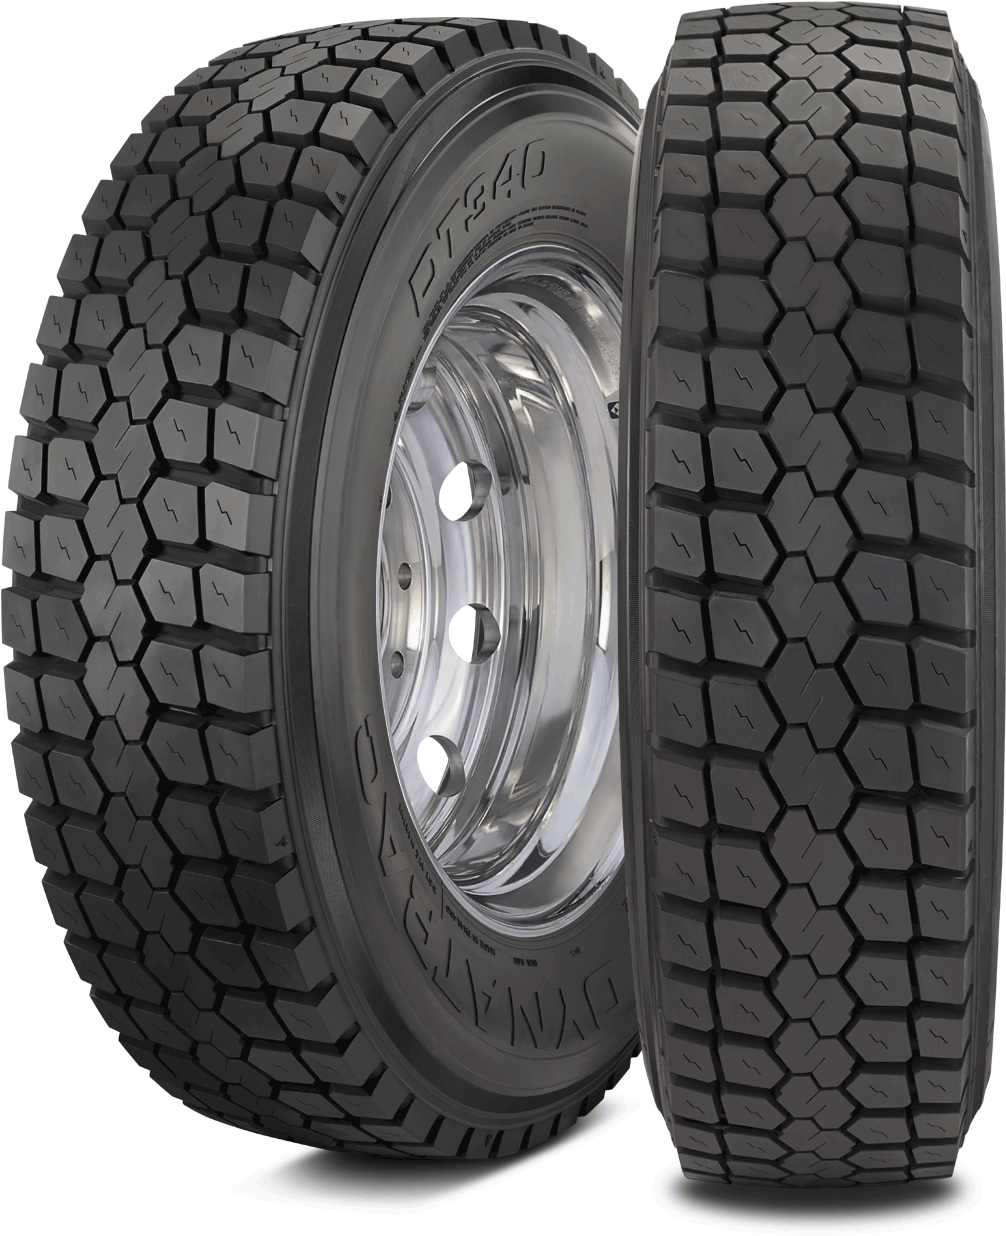 Hercules Tires Png Wb110 Dynatrac Commercial Truck - Hercules Tire & Rubber Company, Inc. (1044x1256), Png Download